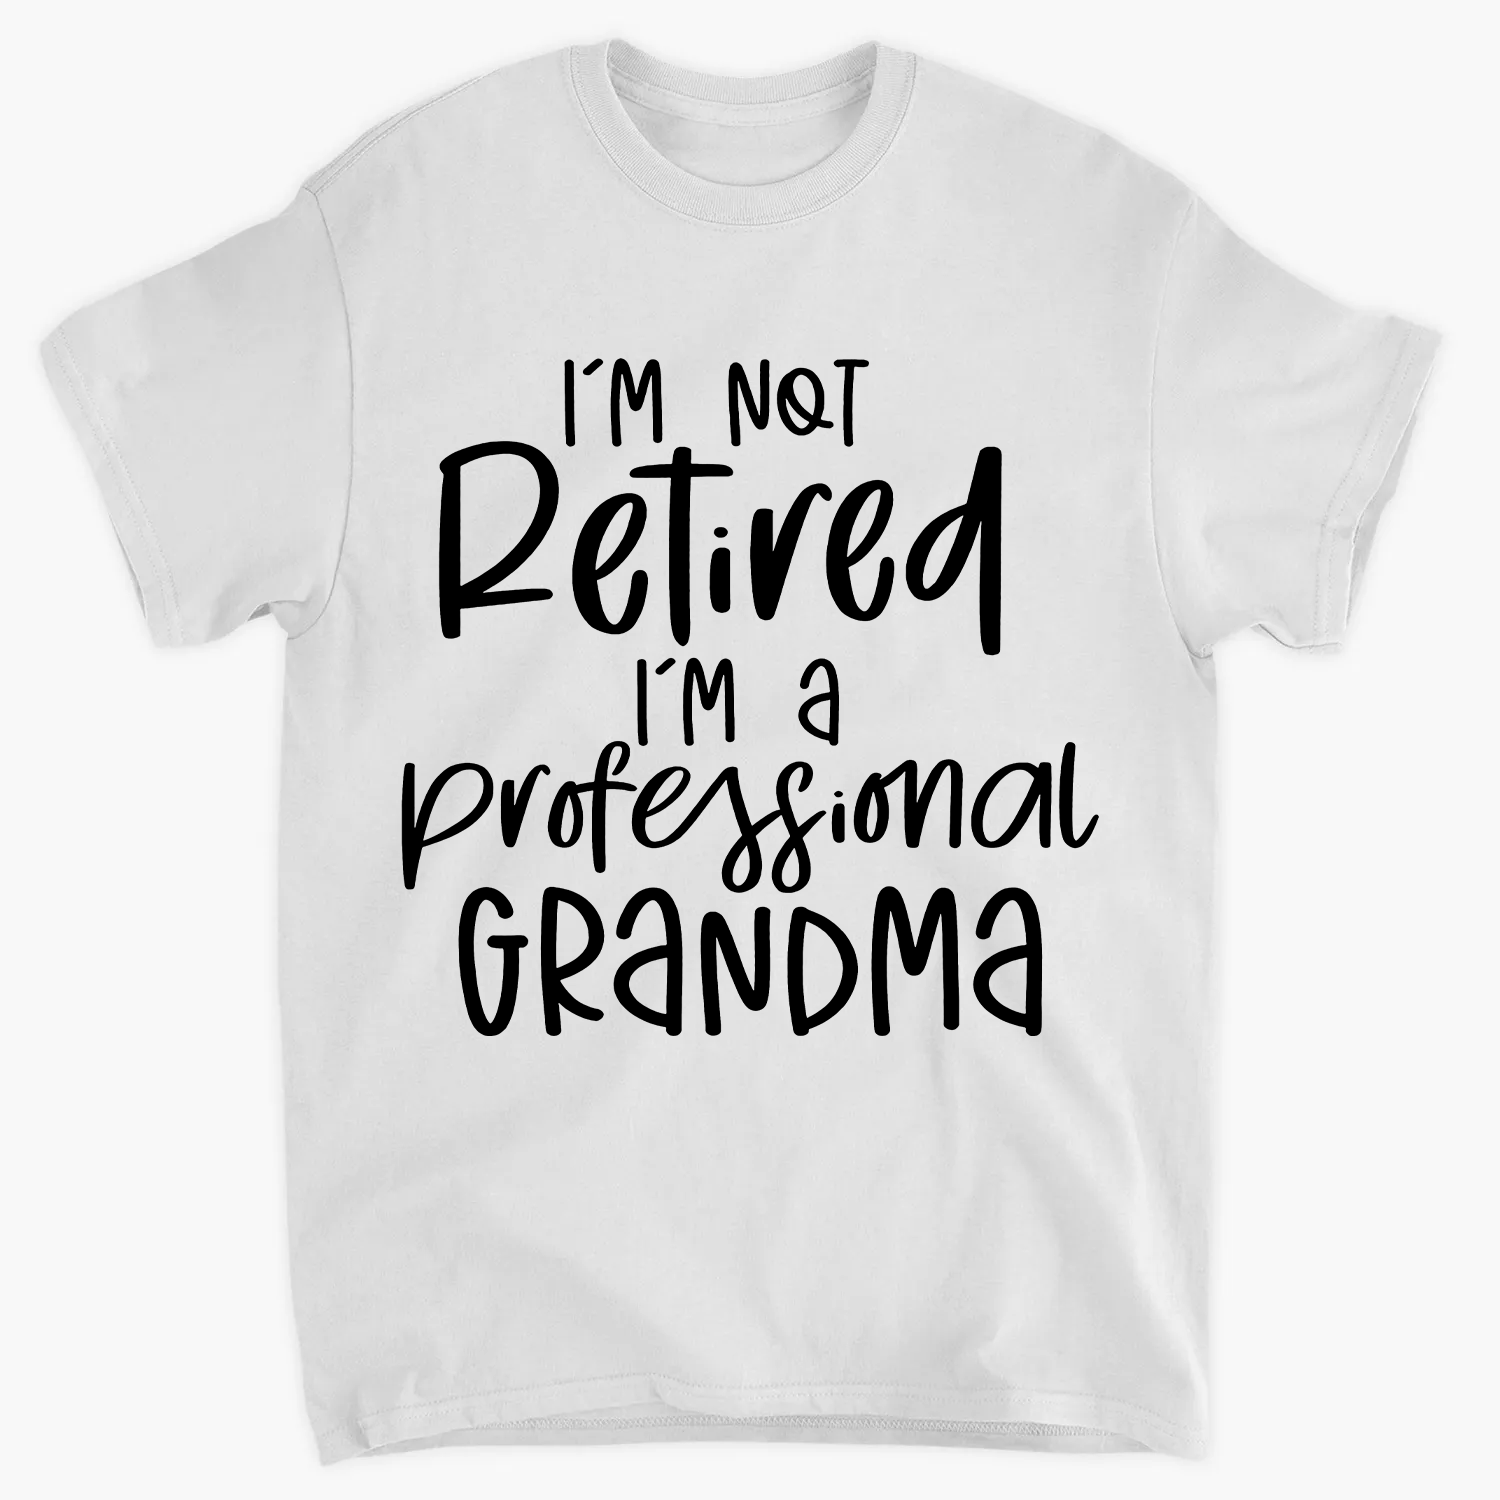 I'm Not Retired I'm A Professional Grandma - T-shirt - Mother's Day Gift For Grandmother, Grandma, Grandkid ARND0014